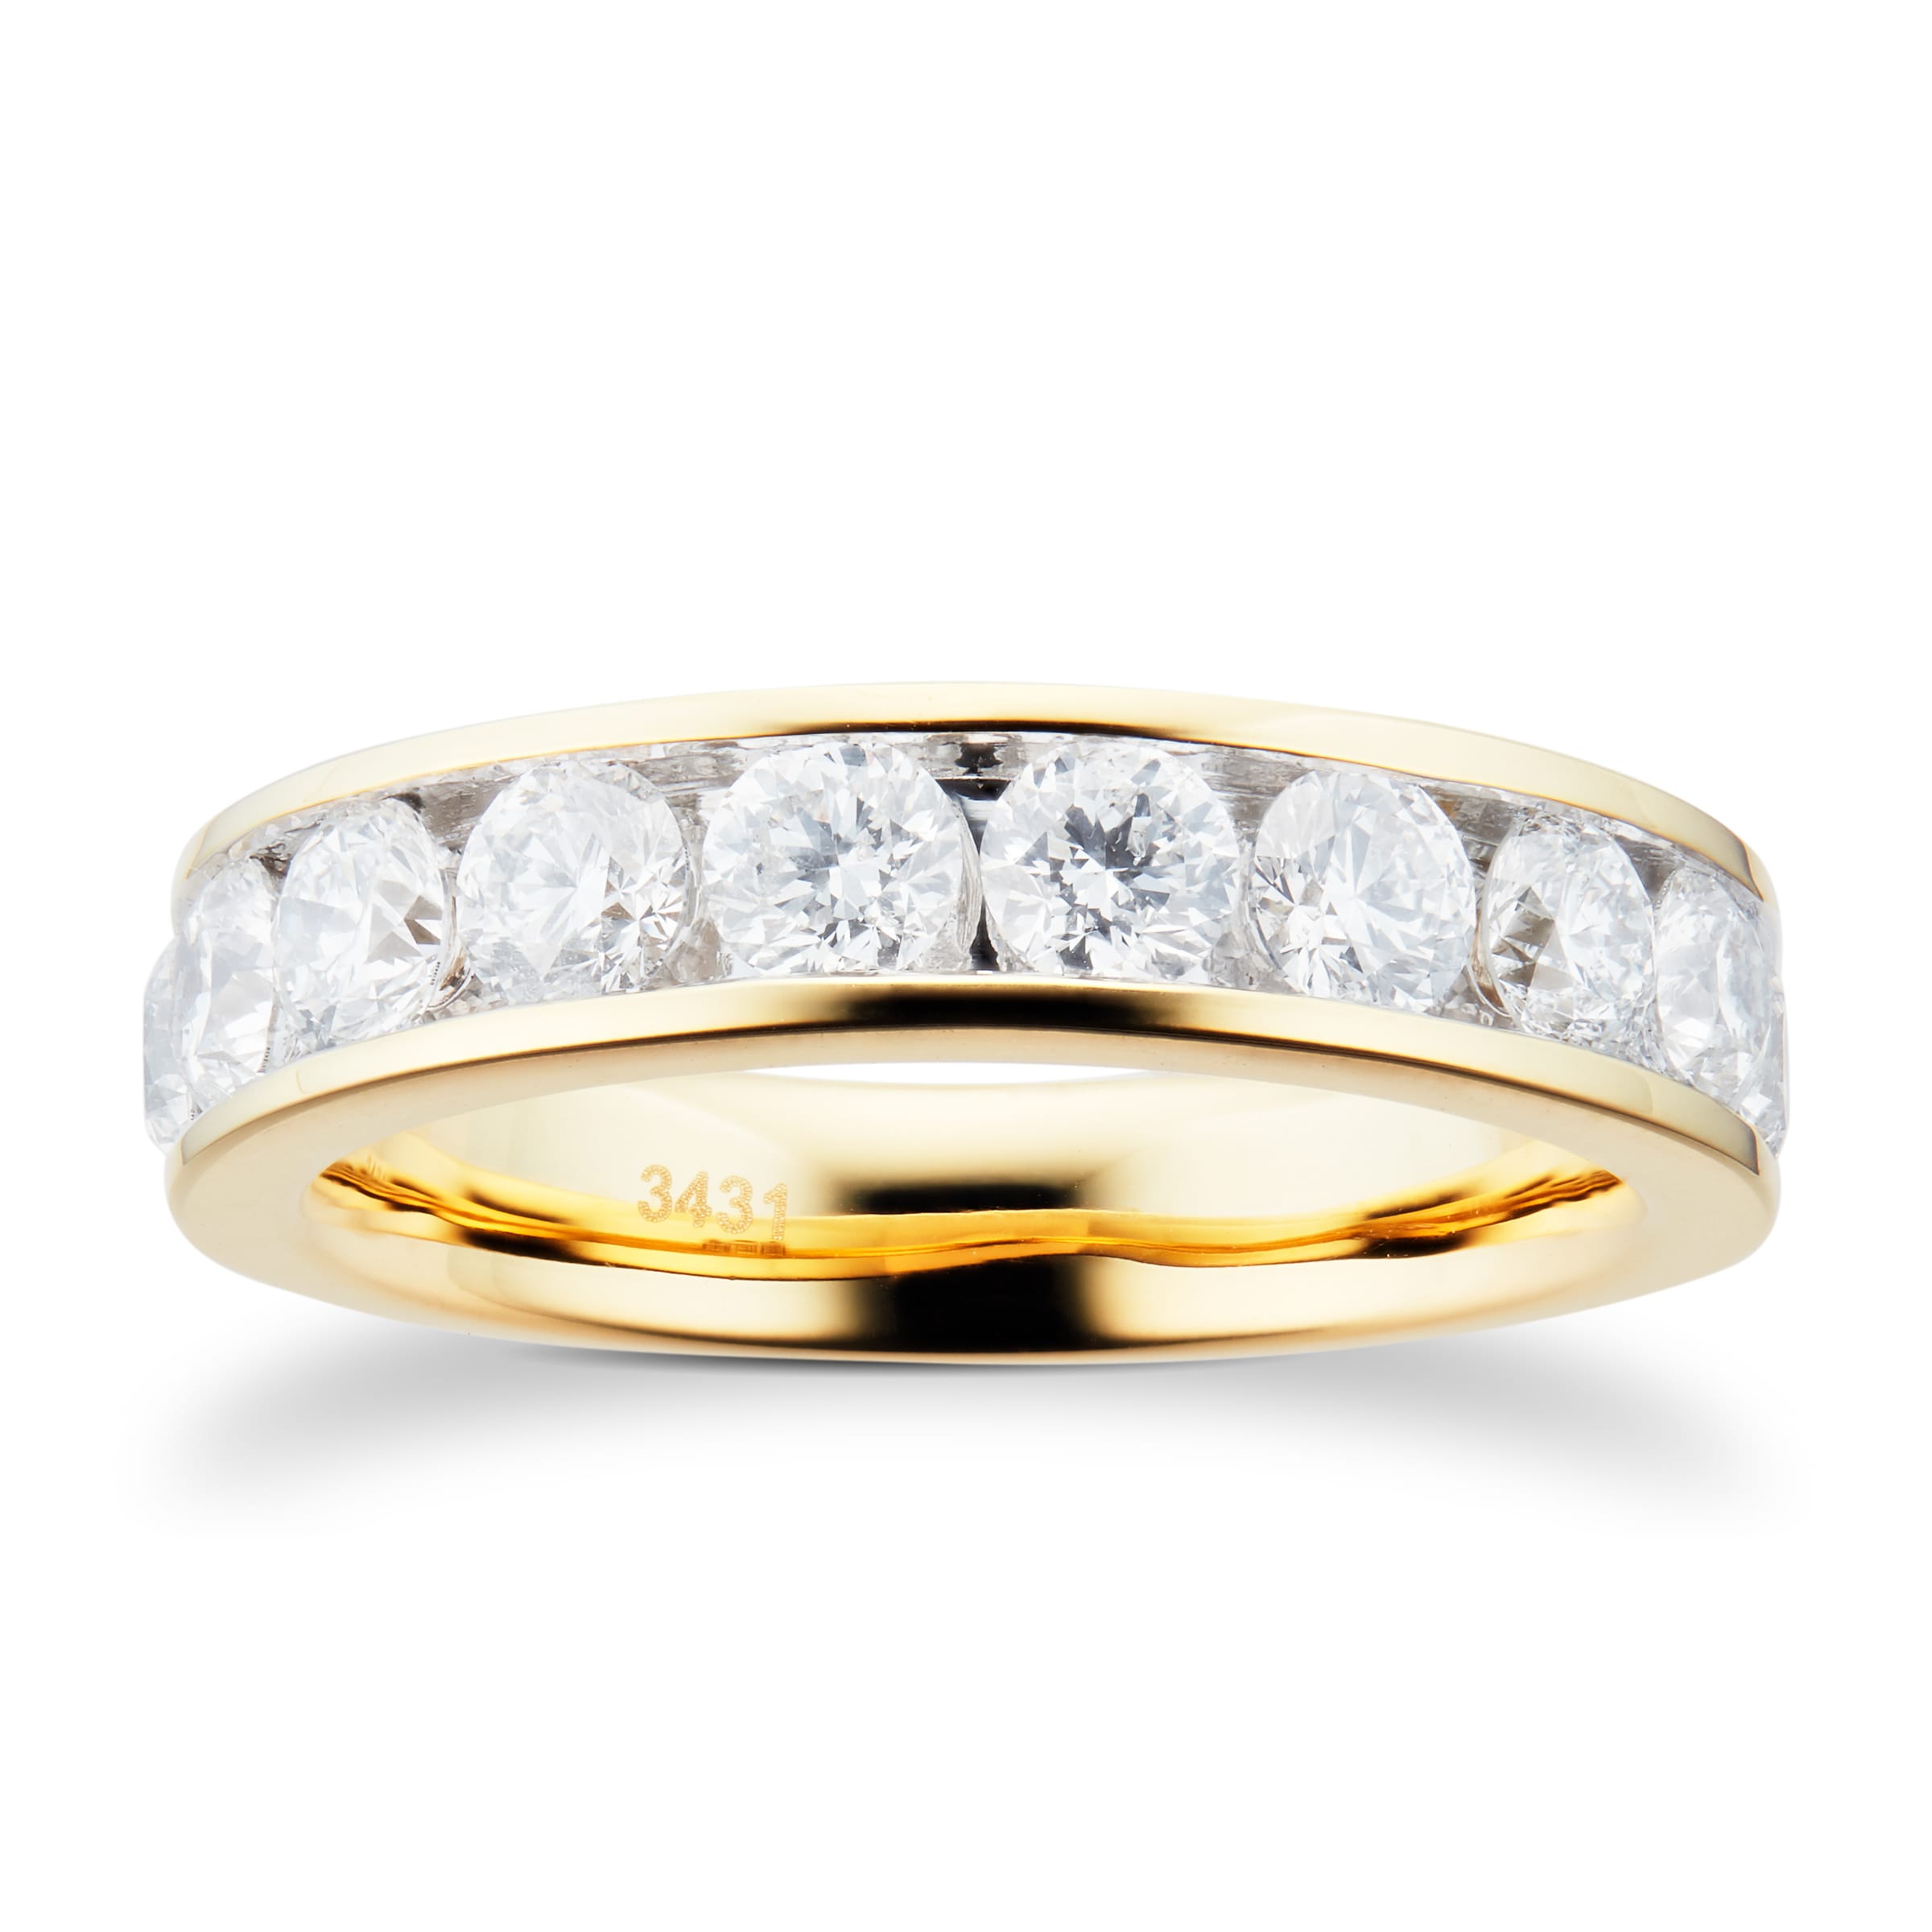 18ct Yellow Gold 1.50ct Brilliant Cut Goldsmiths Brightest Diamond Eternity Ring - Ring Size M